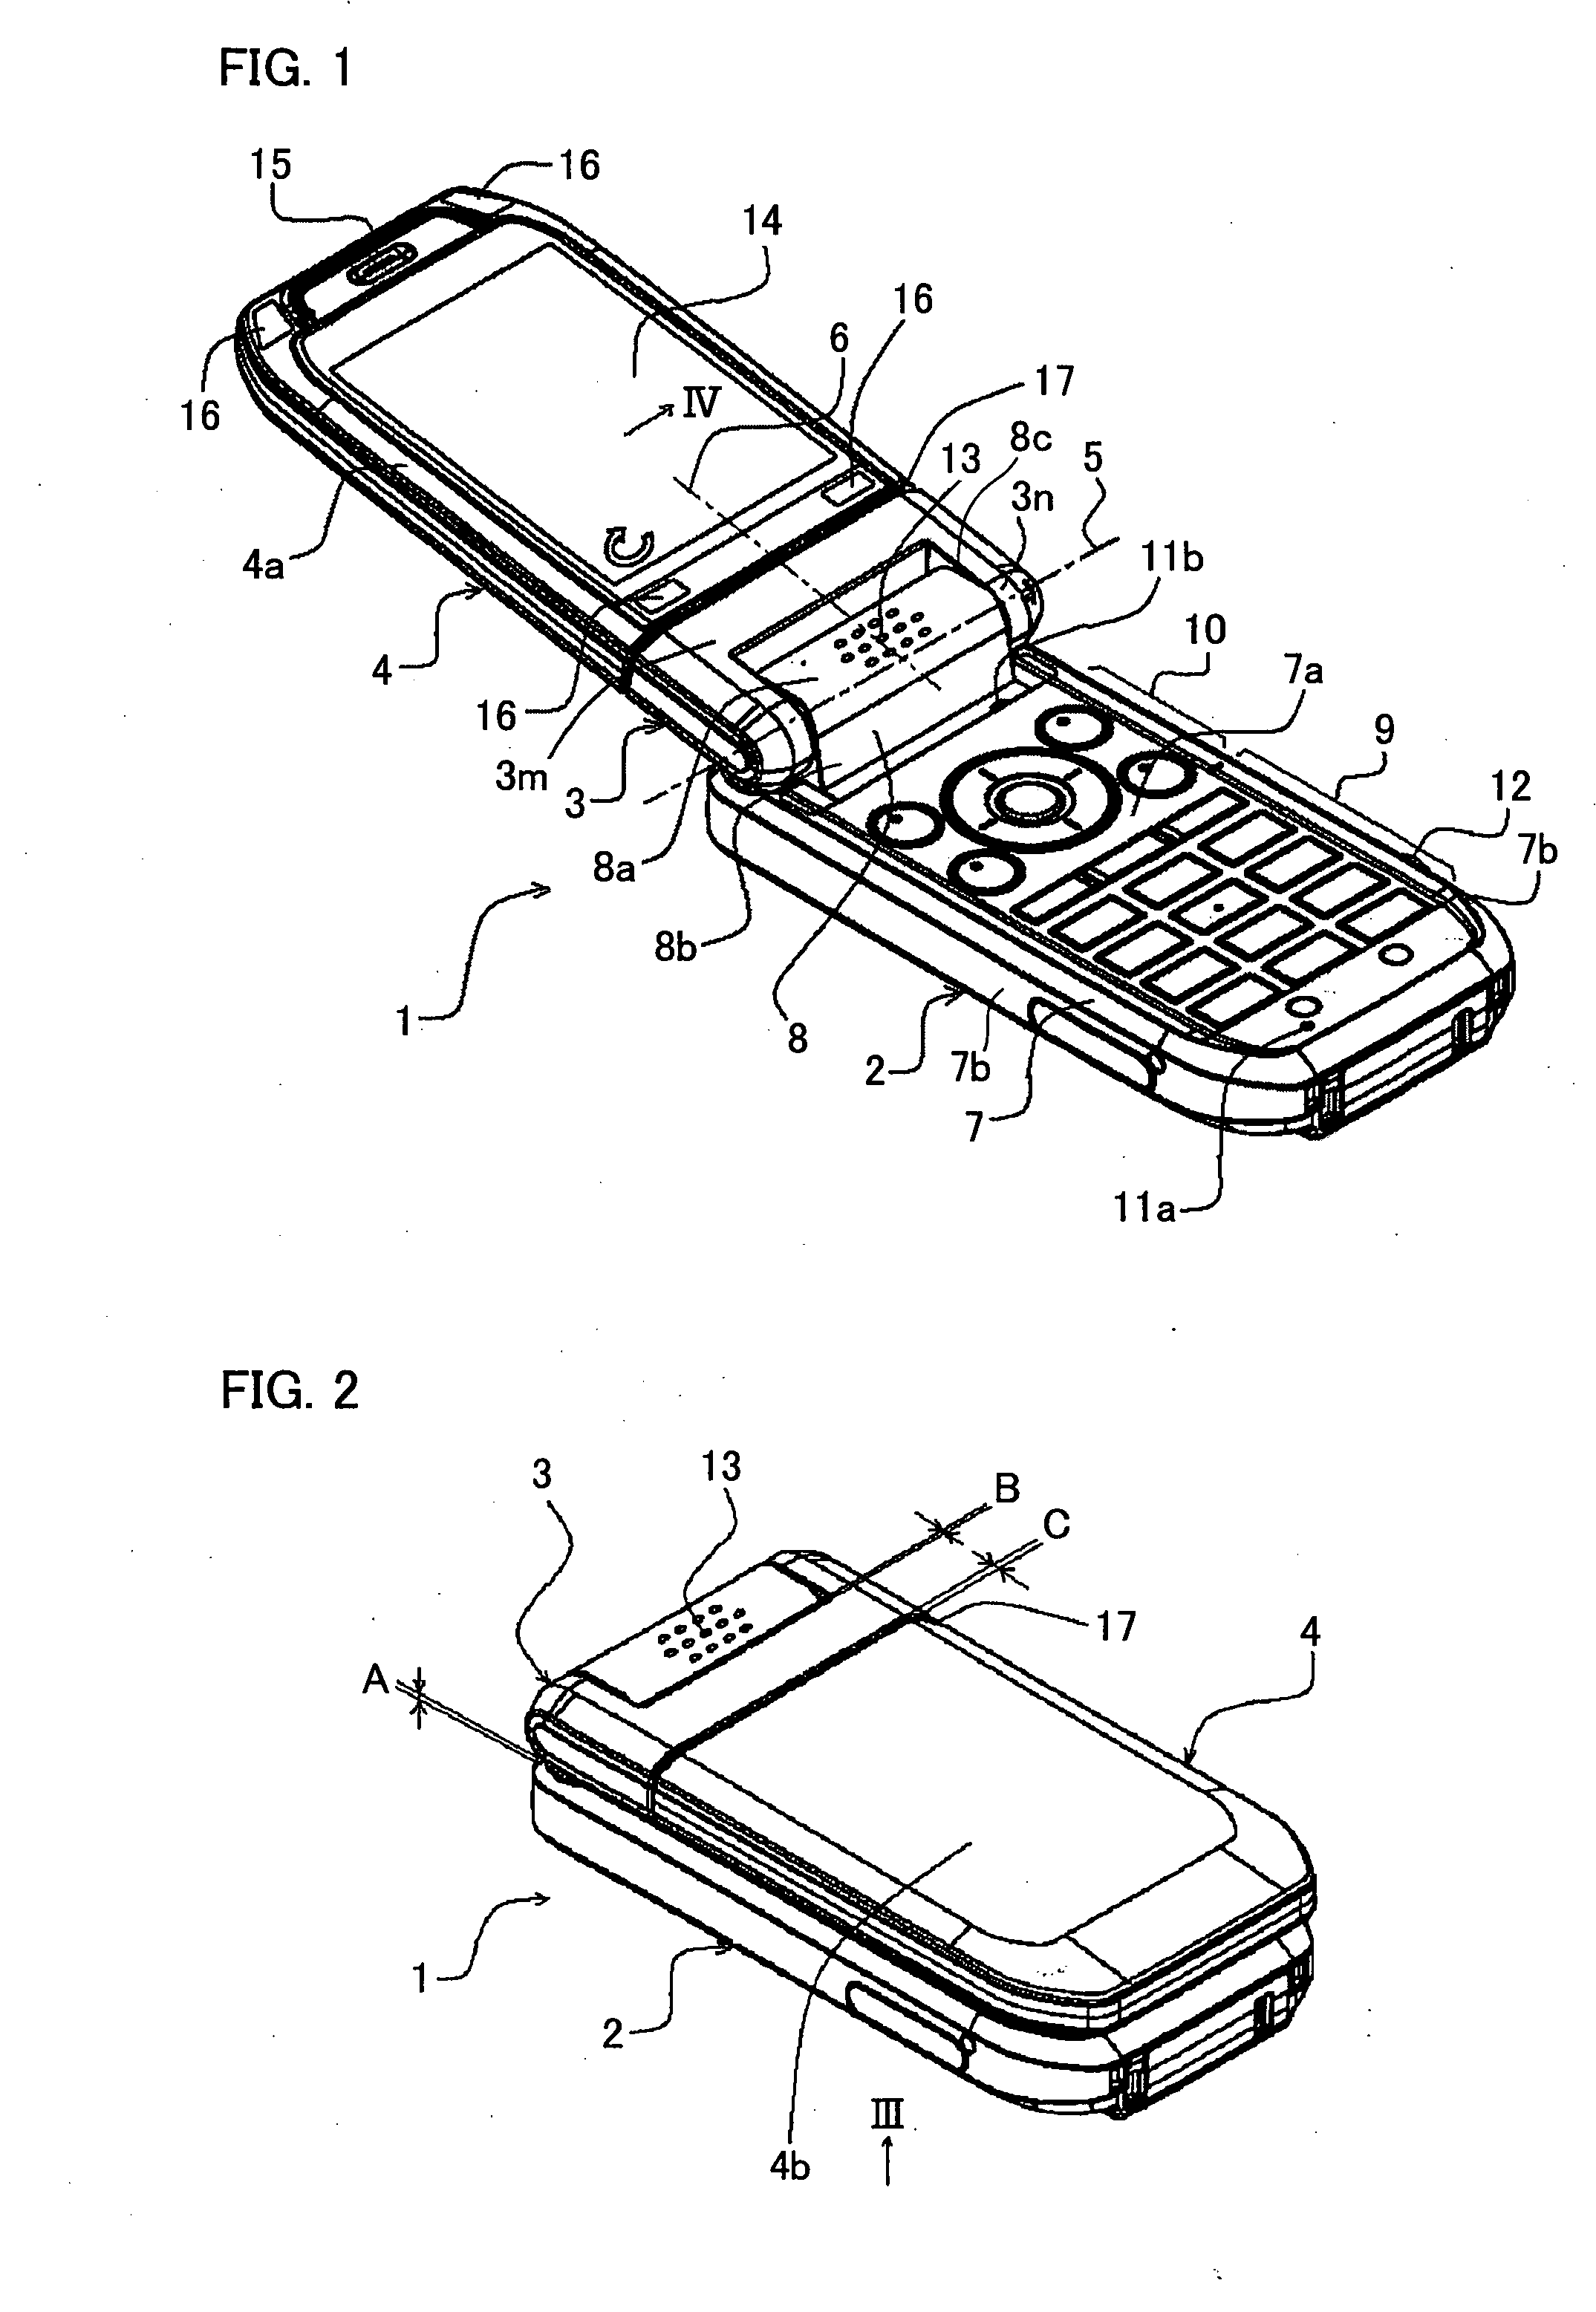 Portable device